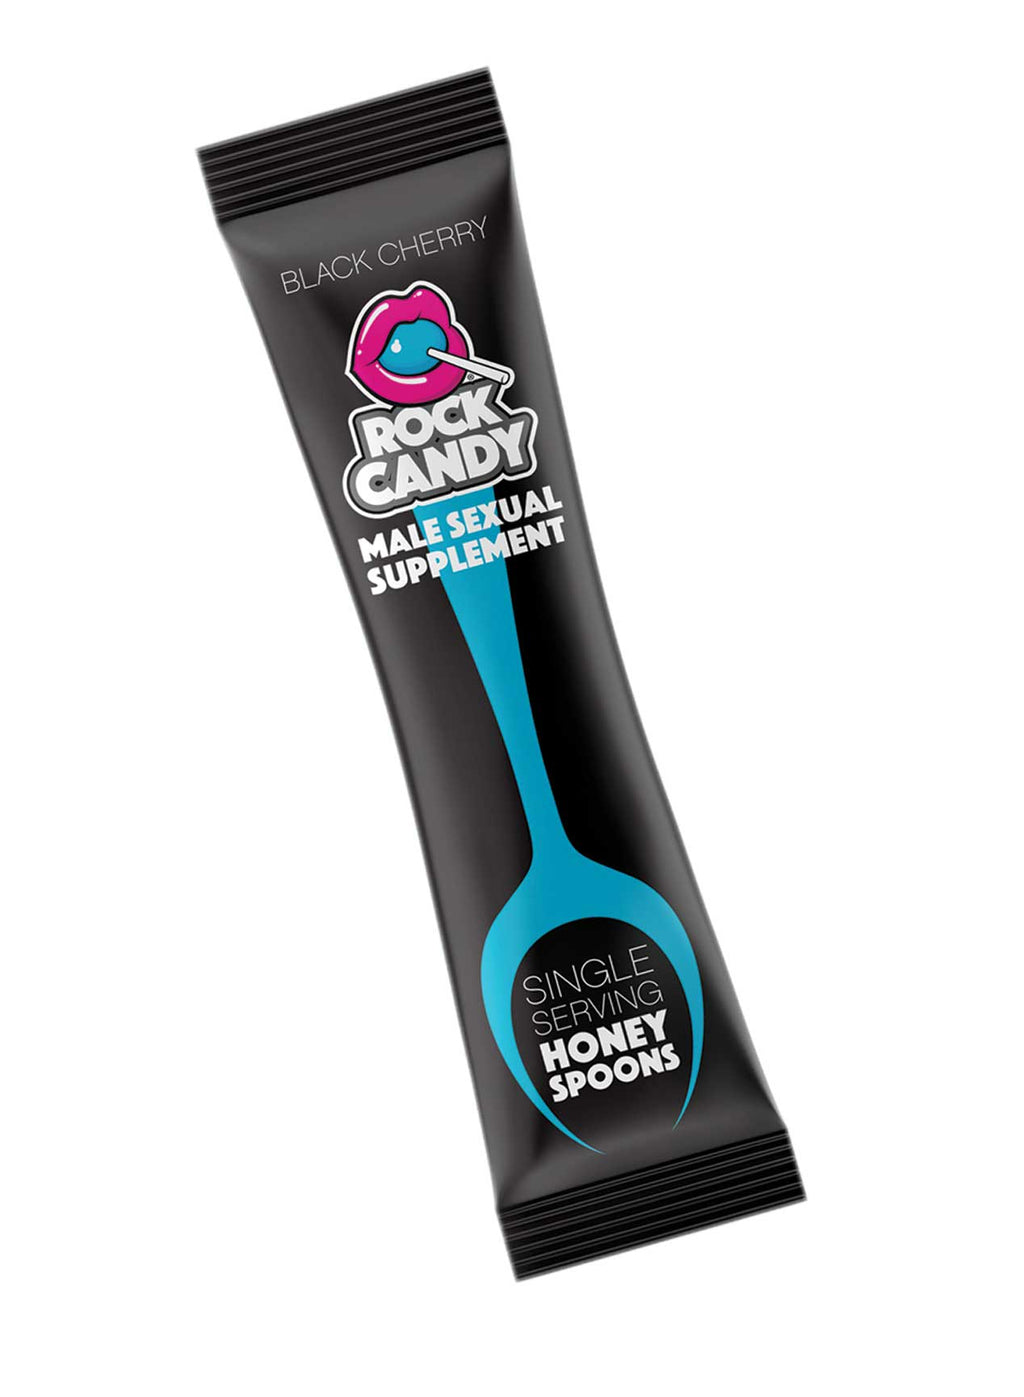 Honey Spoon - Male Sexual Supplement - Black  Cherry 24 Ct Display RC-SMBC-124